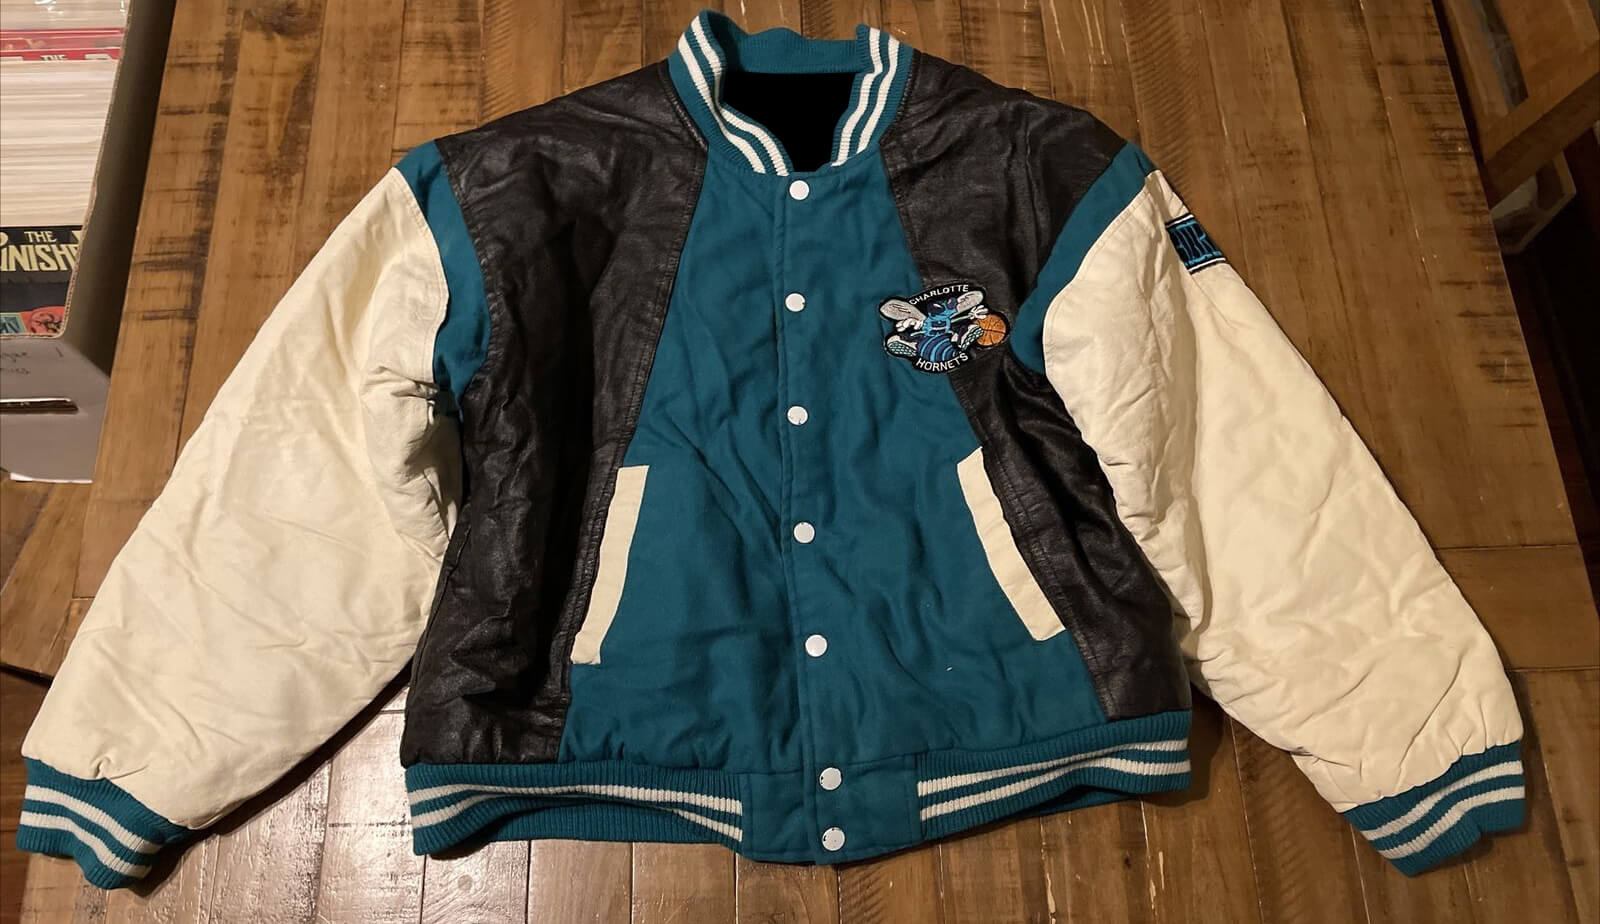 NHL, Jackets & Coats, Washington Capitals Vintage Starter Jacket